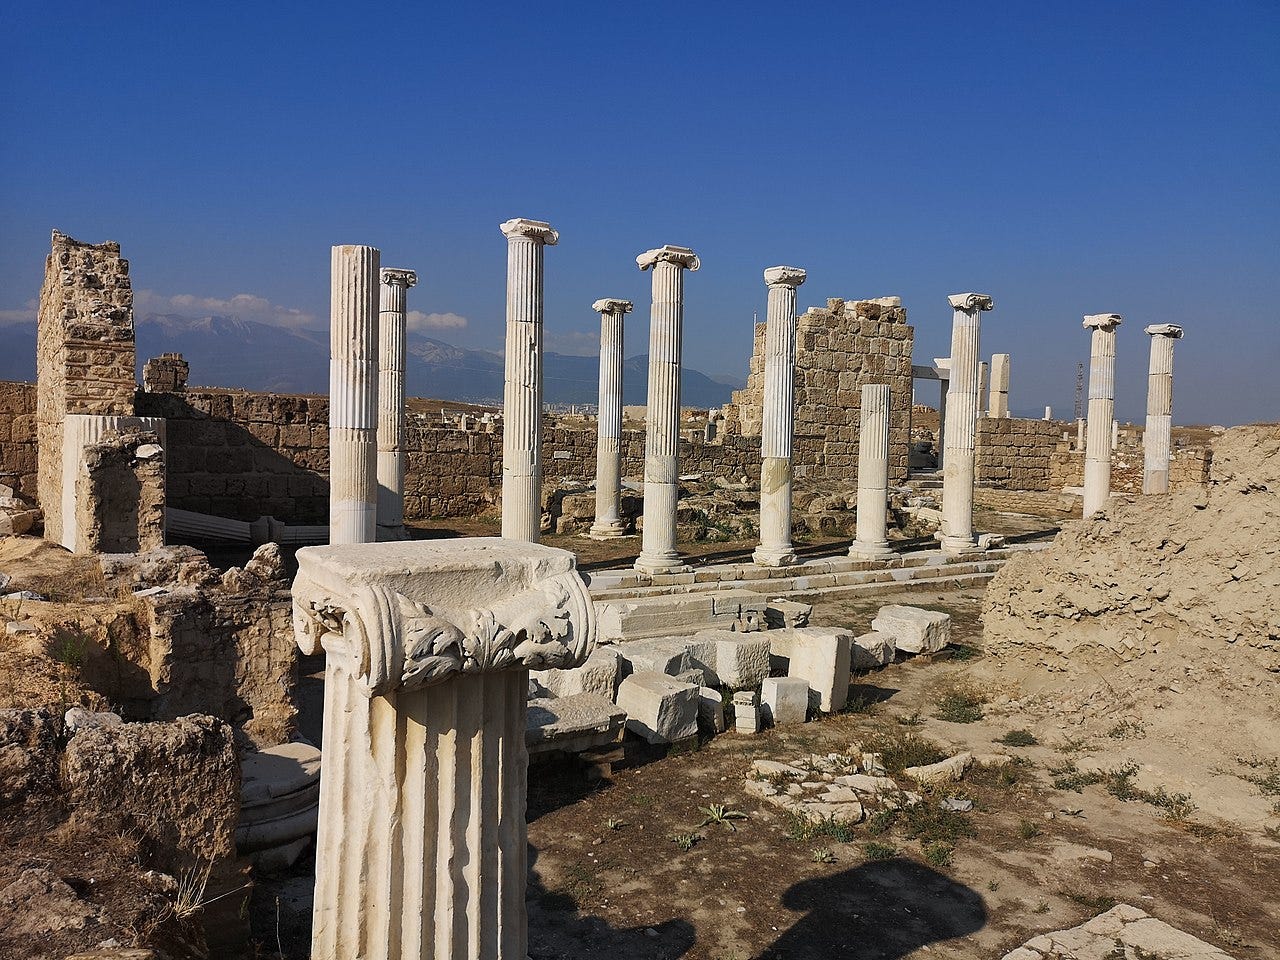 Archaeological site featuring Roman columns in modern-day Türkiye.